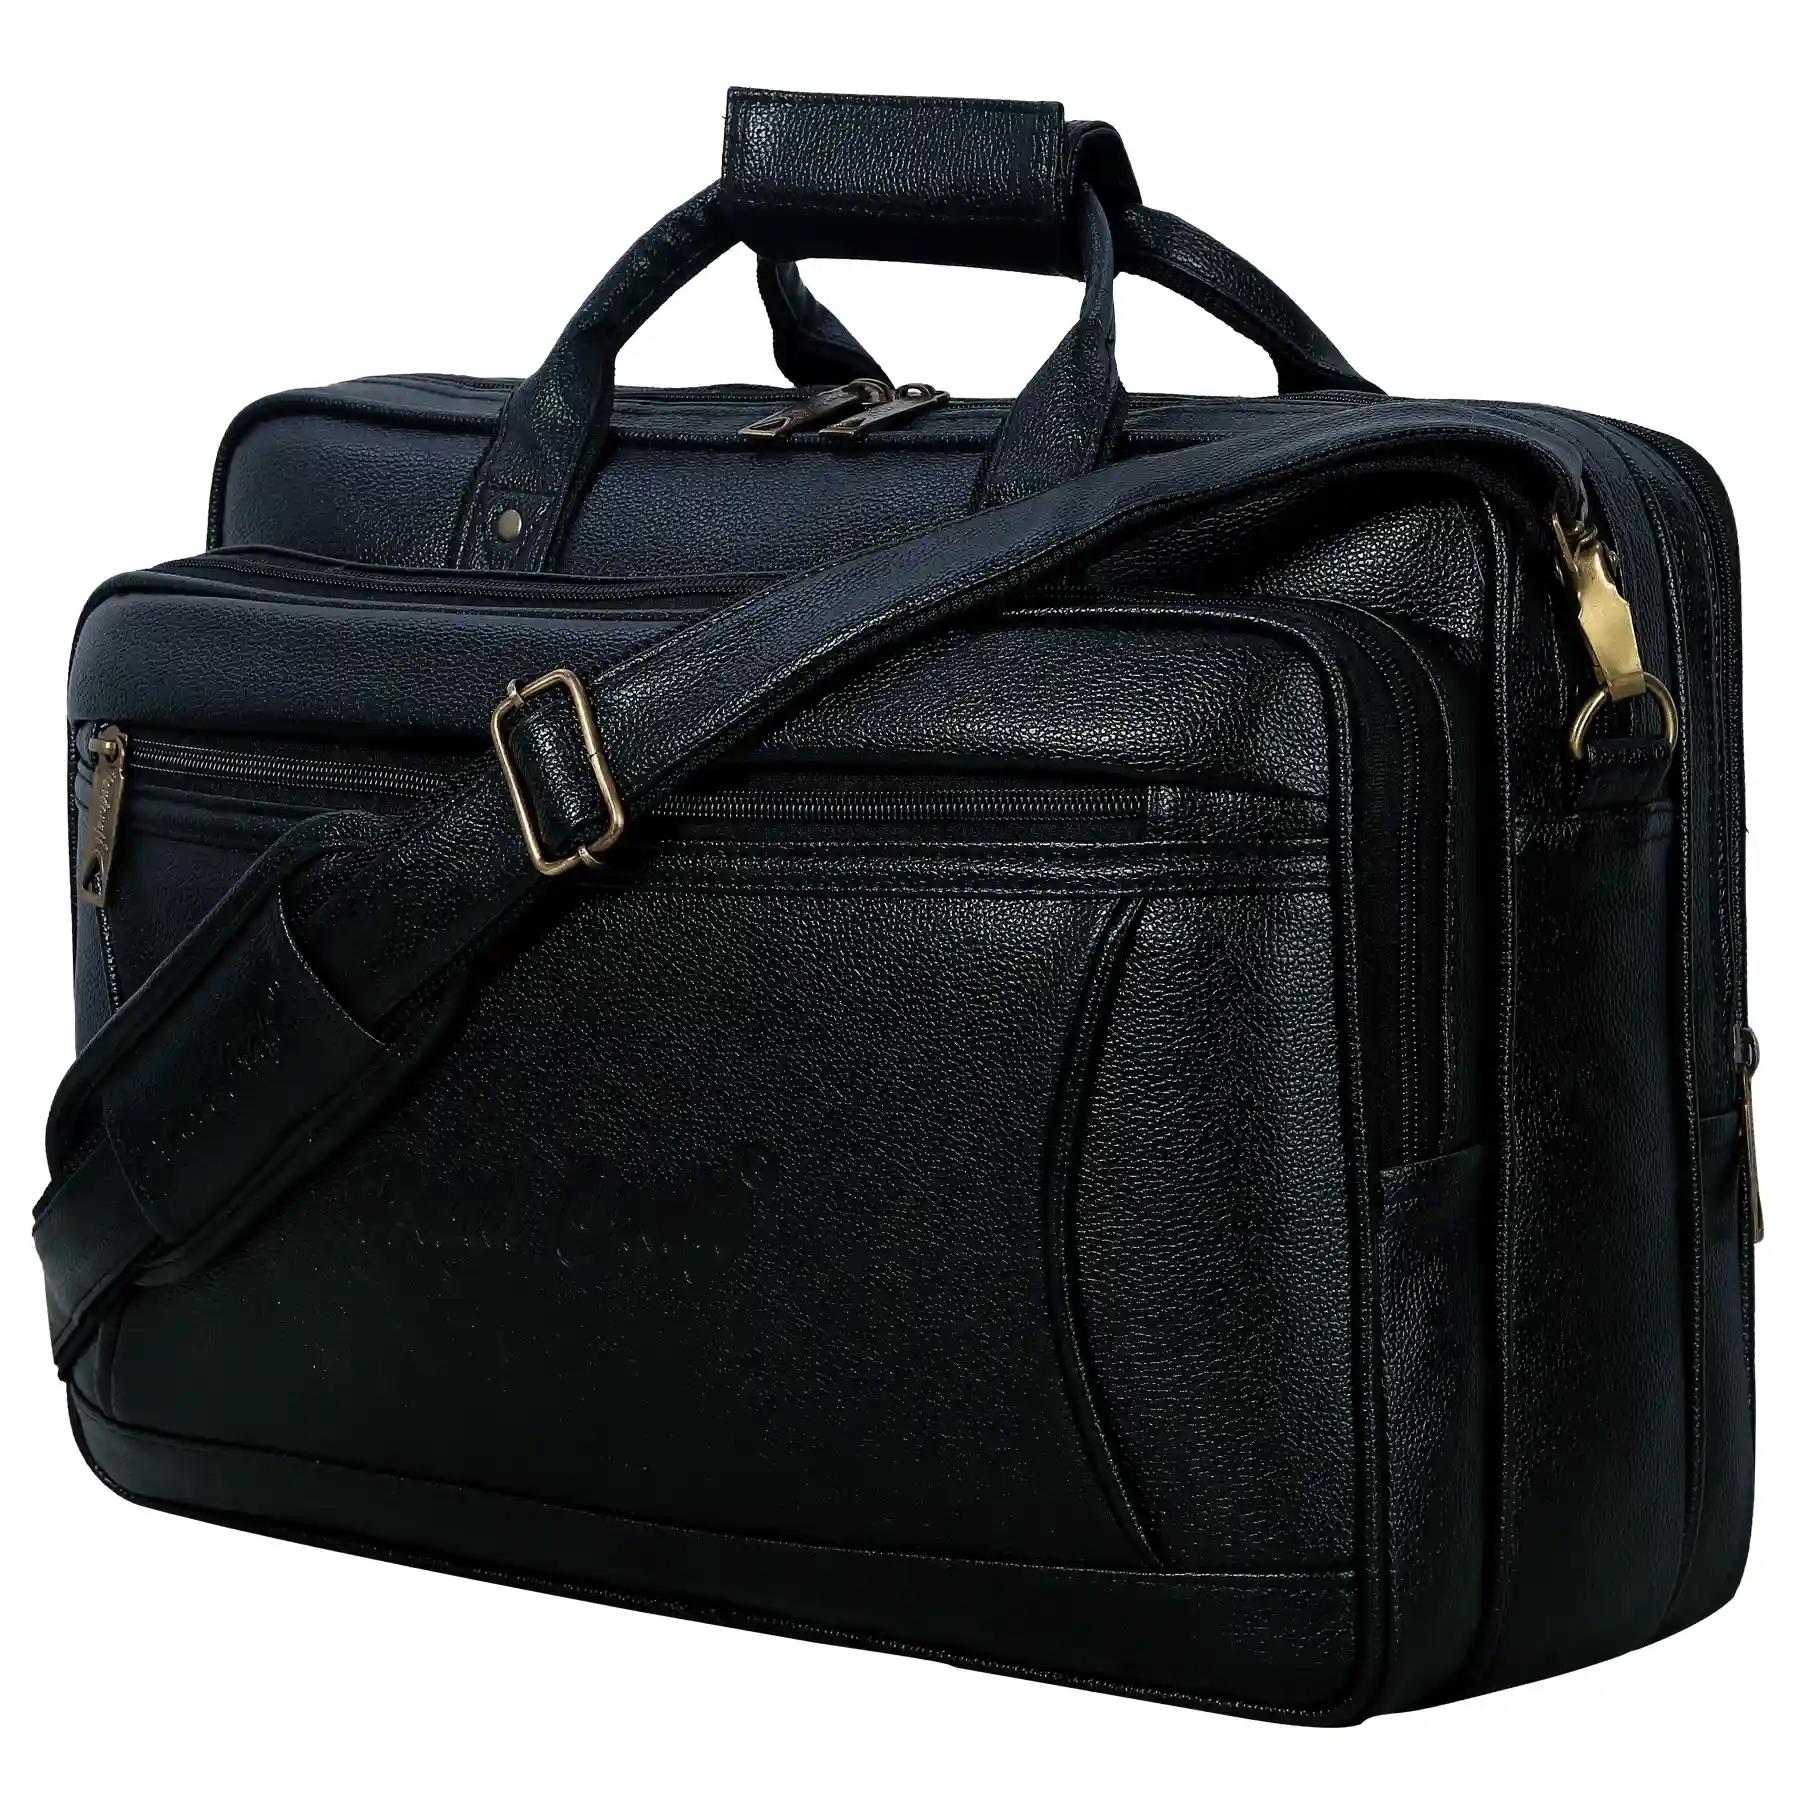 Hard Craft PU Leather Formal Office Laptop Sleeve Bag For 15.6 inch Laptop MacBook NoteBook Notepad Tablets Crossbody Briefcase Messenger Bag for Men With Detachable Shoulder Straps Large Size